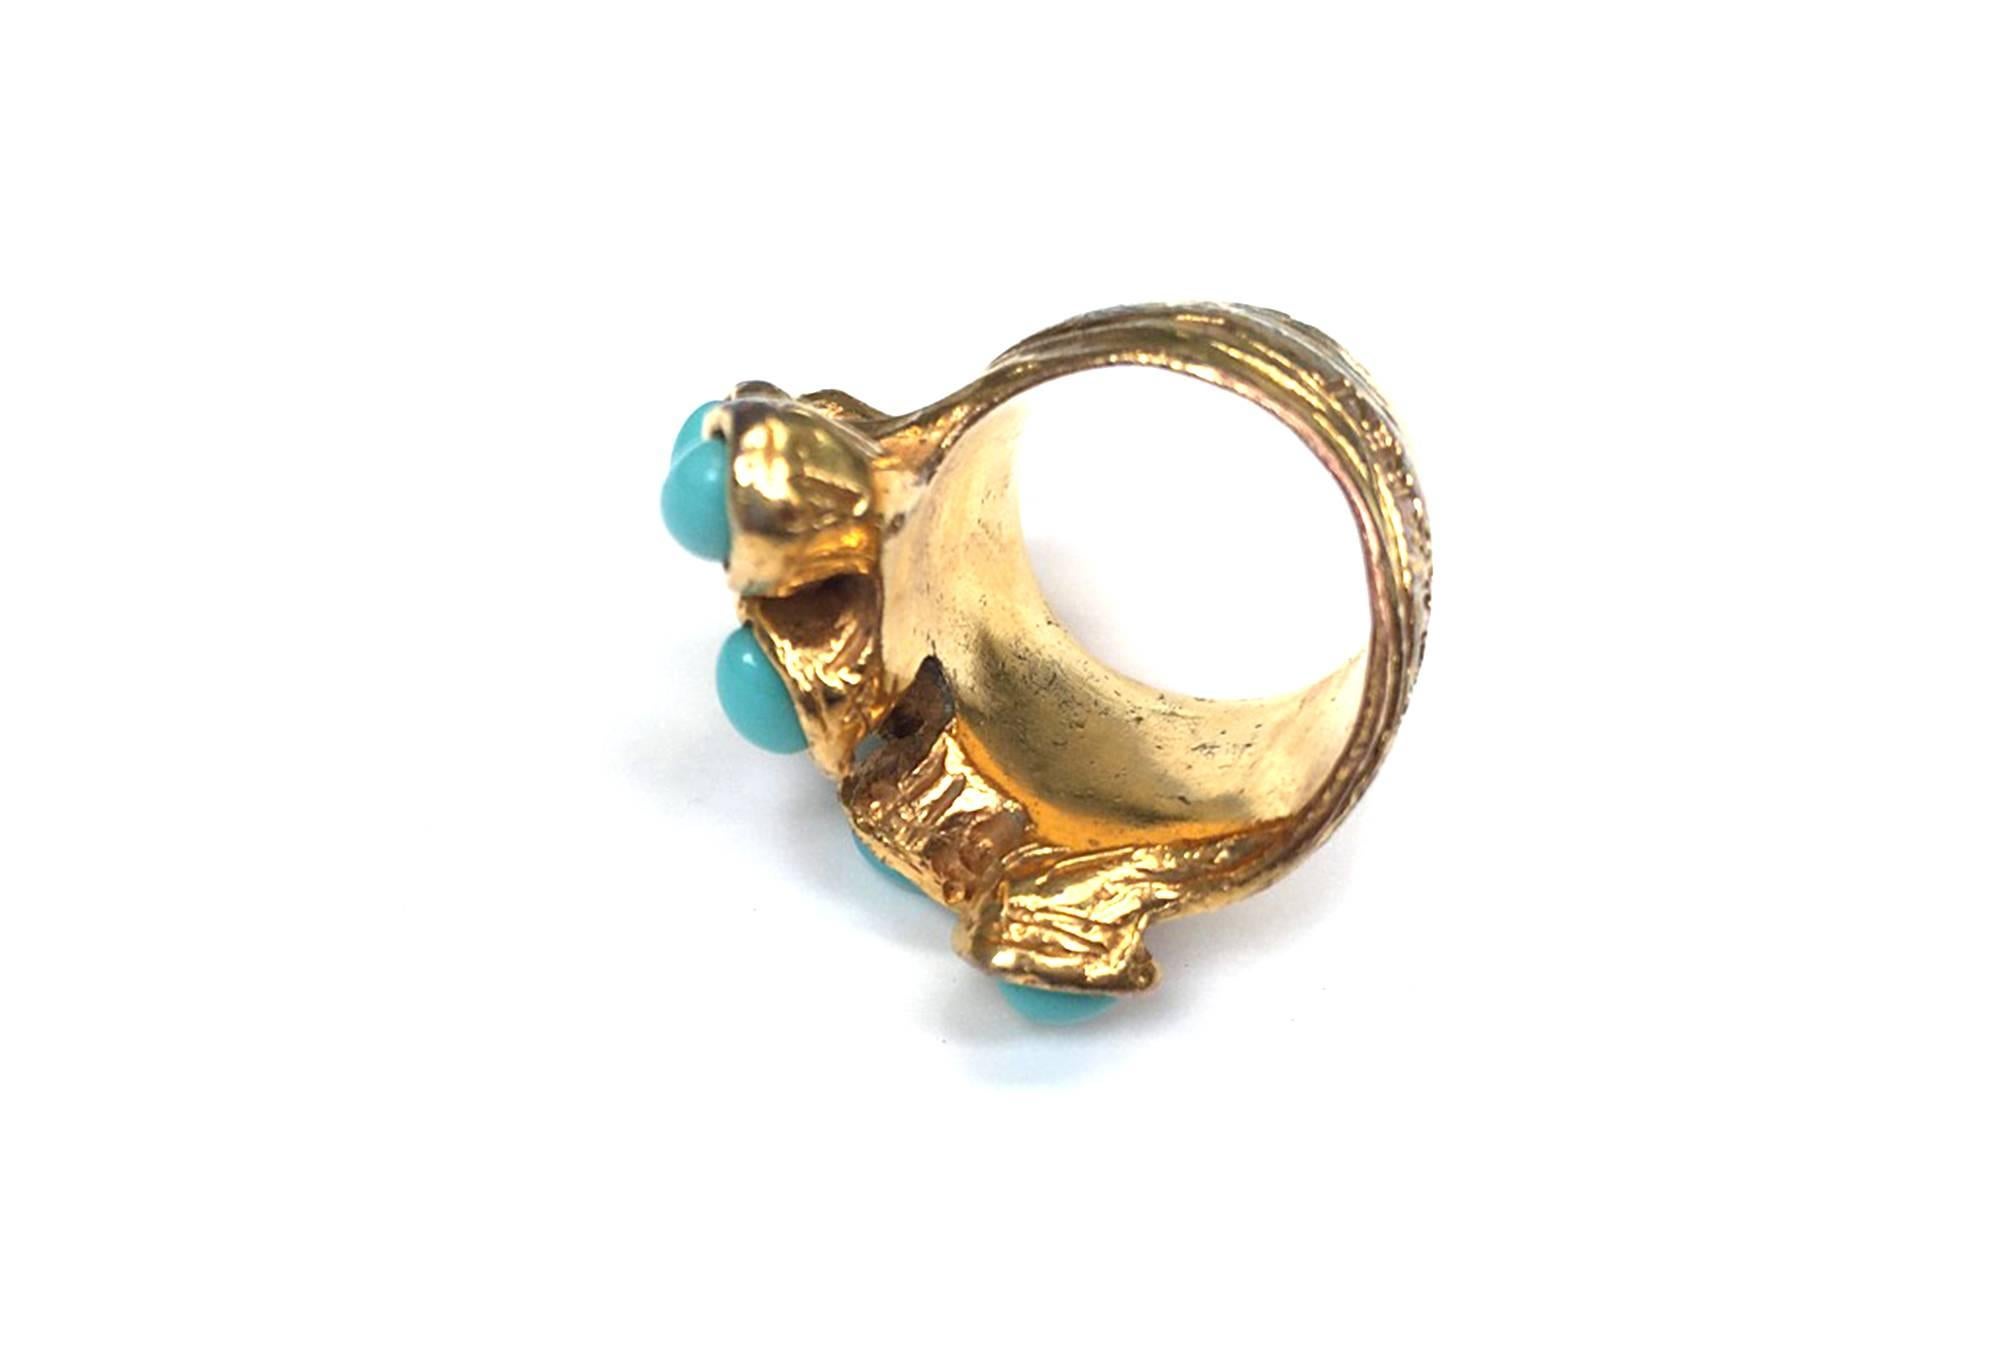 Yves Saint Laurent by Stefano Pilati gold ring w. turquoise stone, Sz 7 1